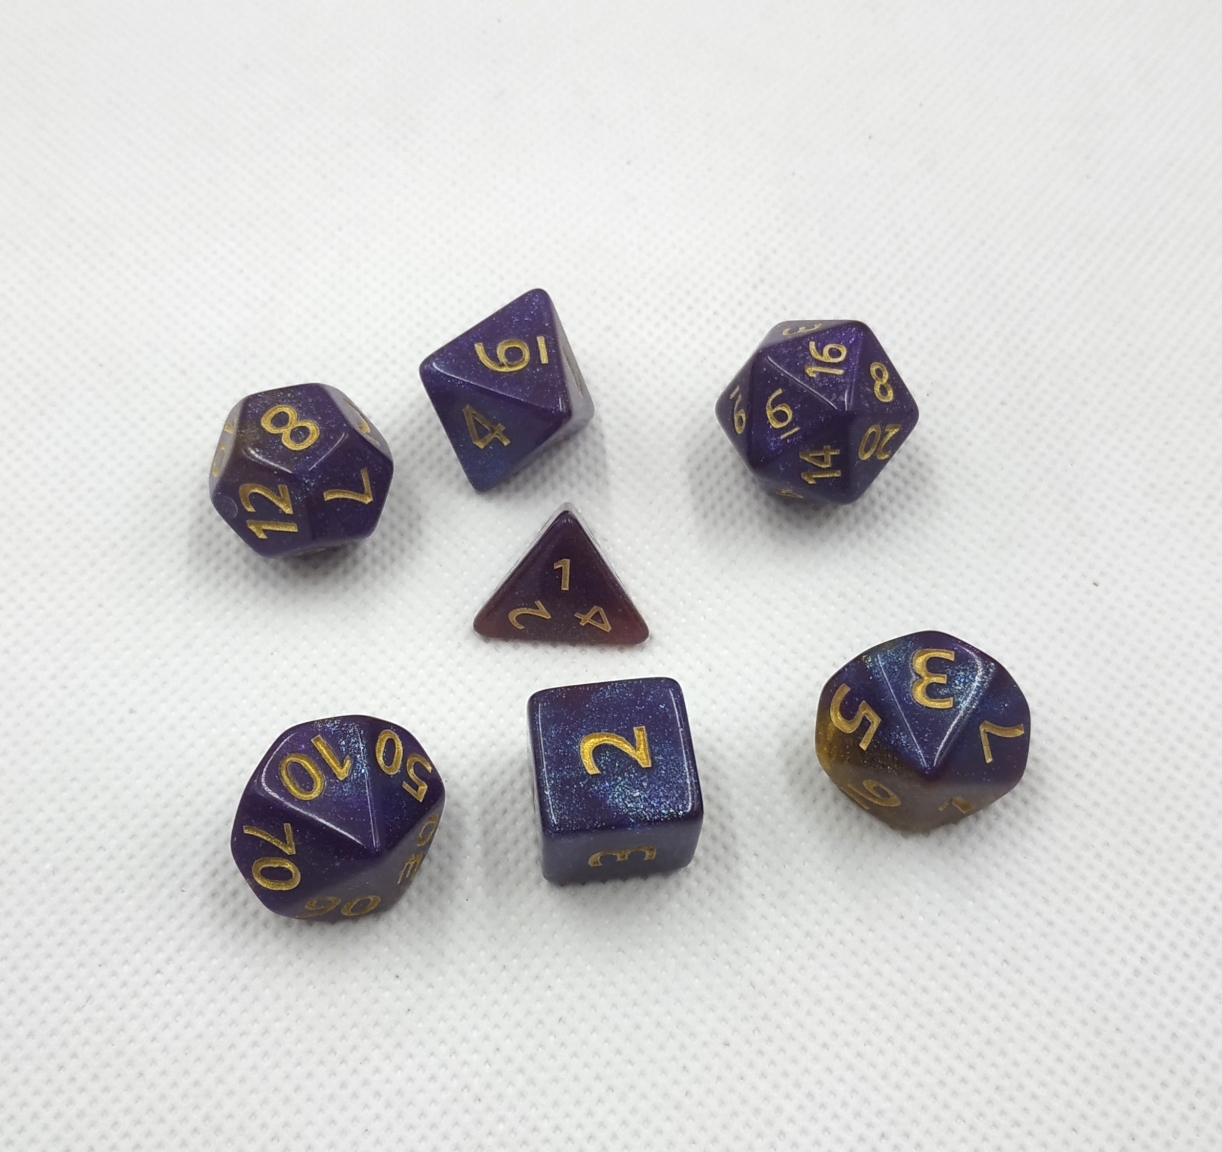 Blue and purple galaxy dice